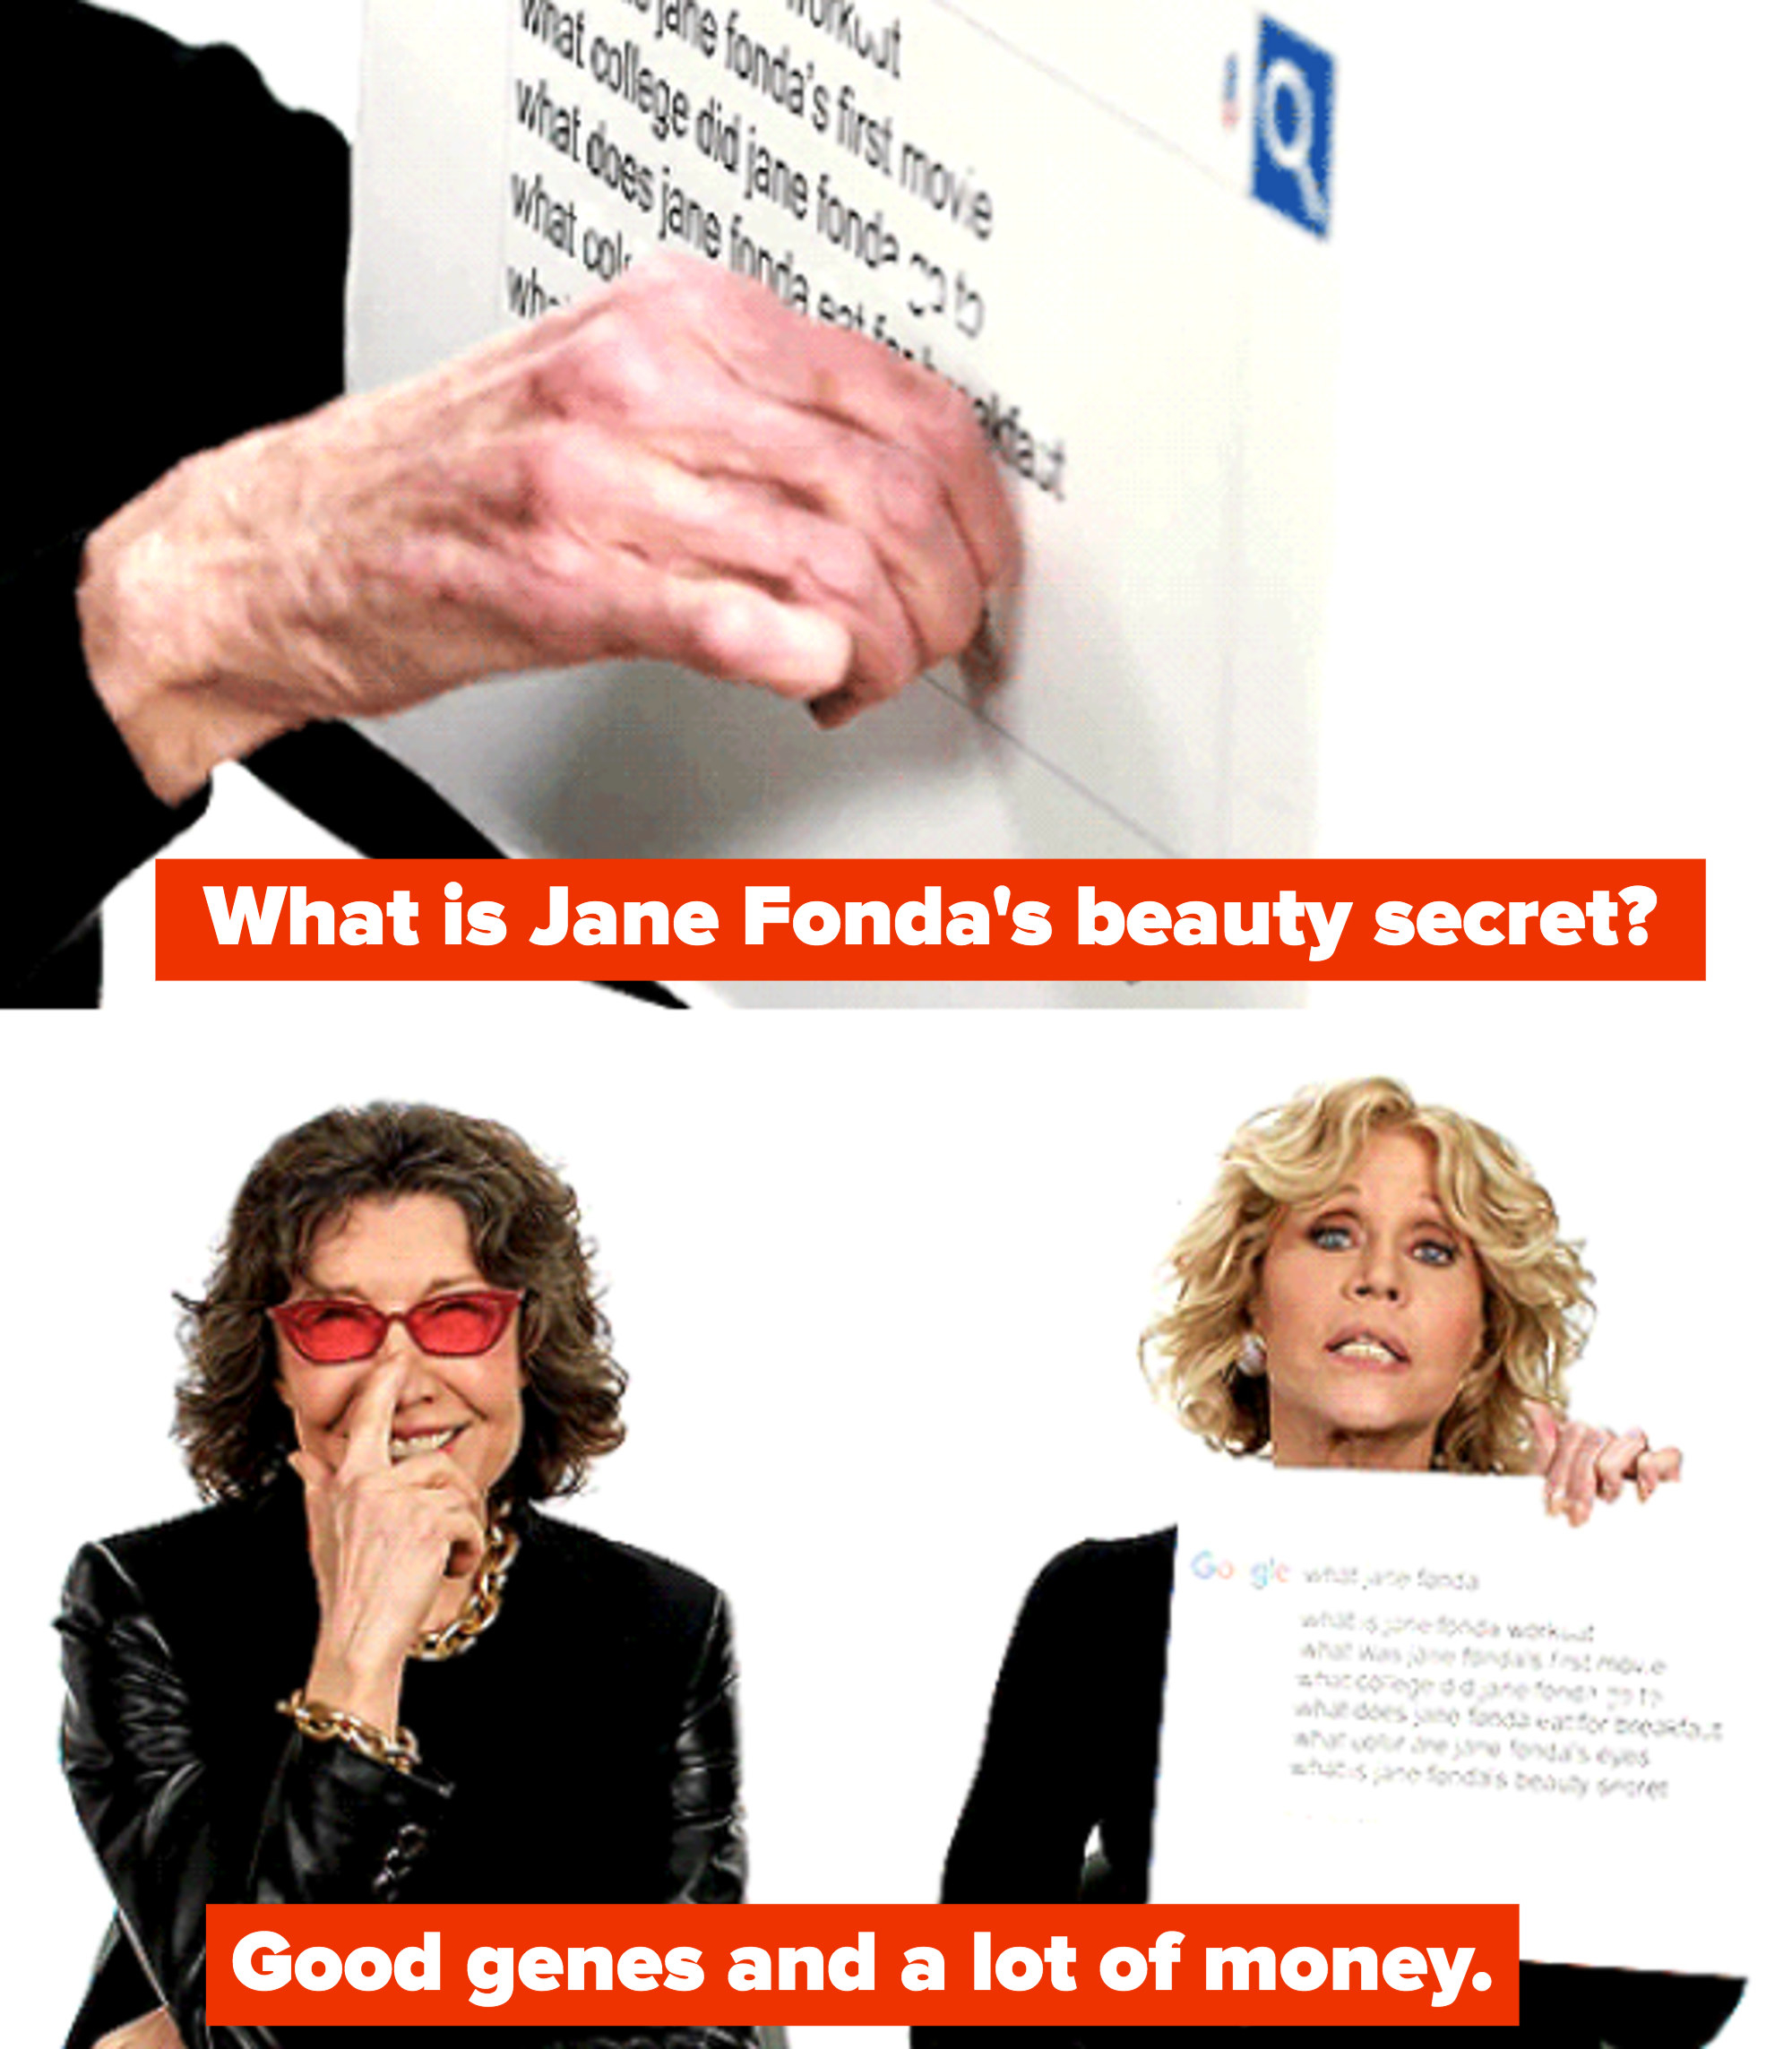 Jane Fonda saying her beauty secret is good genes and a lot of money